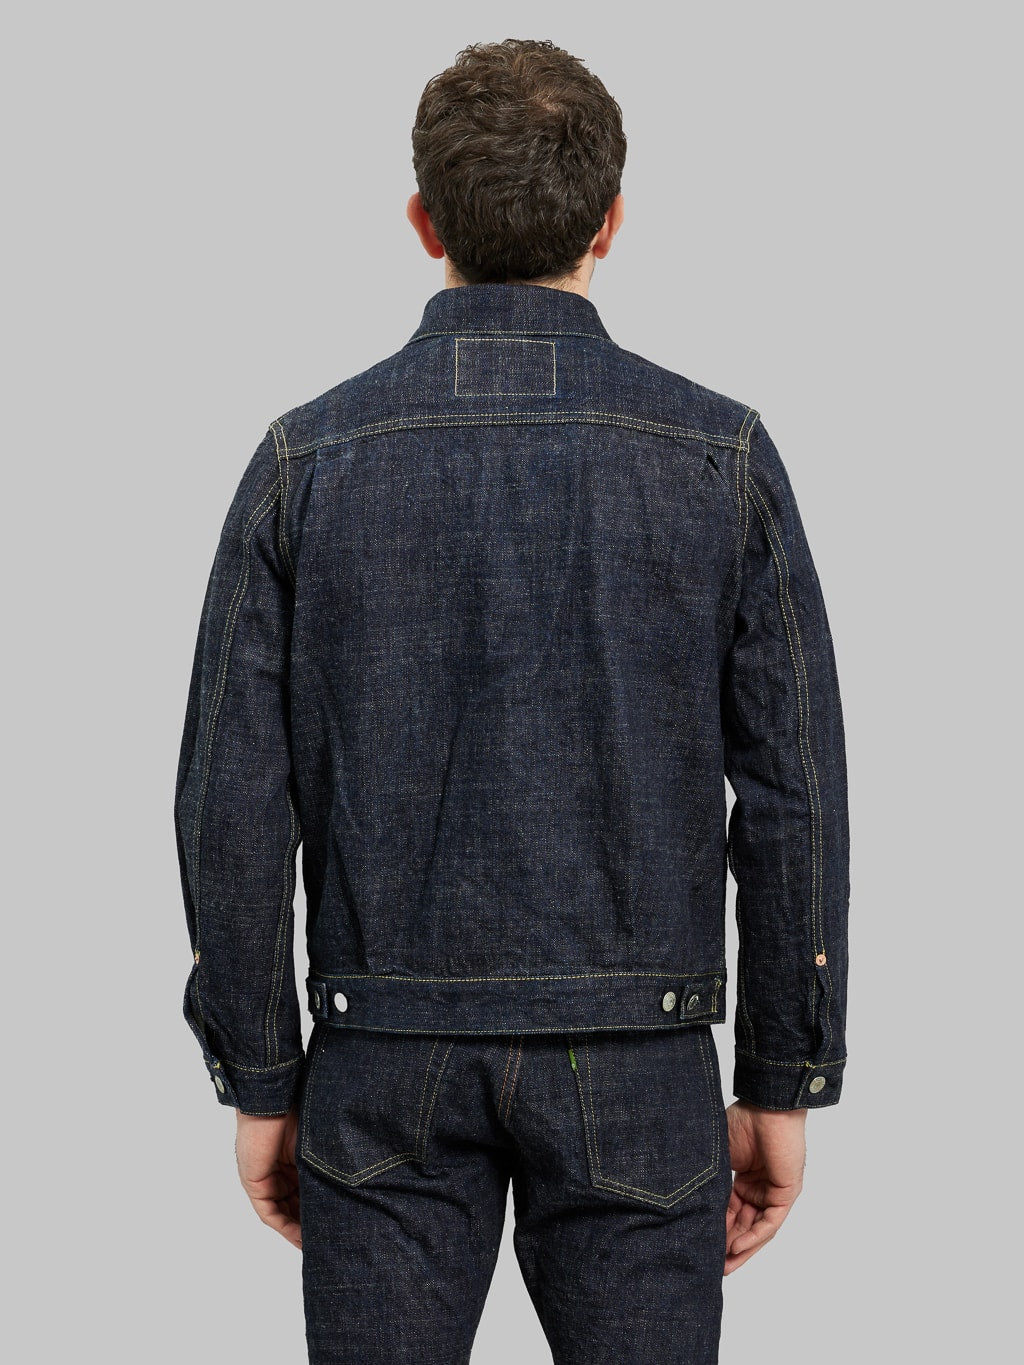 Fob factory Type III denim jacket selvedge back fit